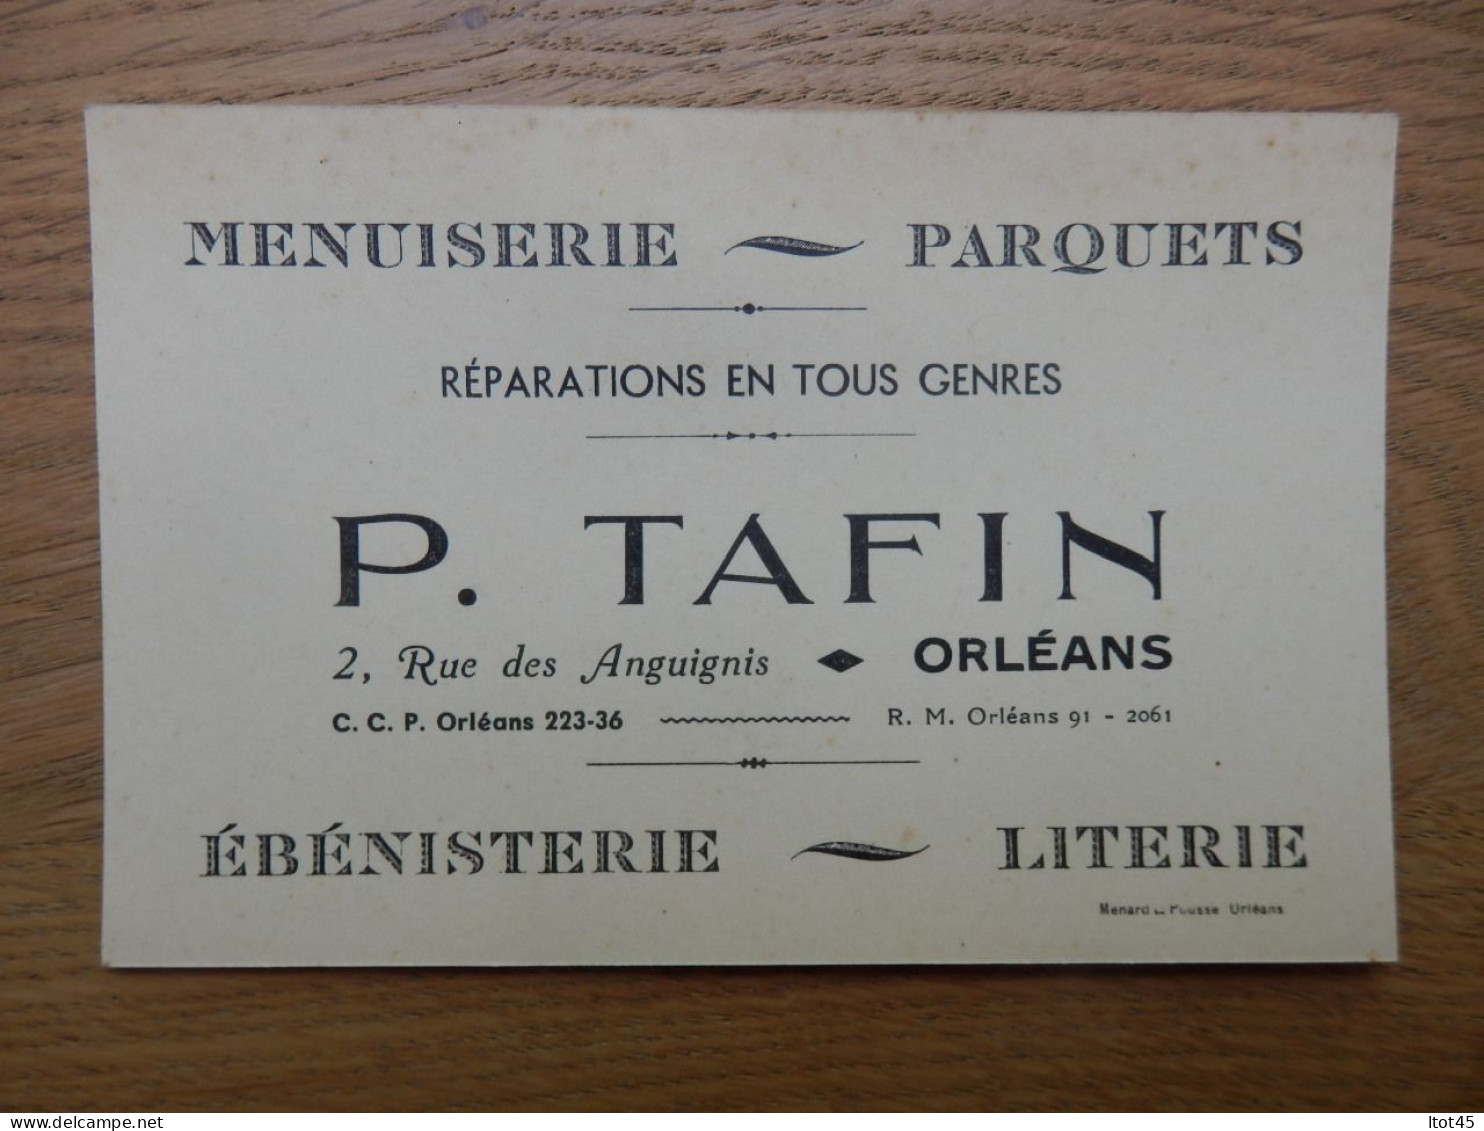 CARTE DE VISITE  P. TAFIN MENUISERIE EBENISTERIE ORLEANS - Visiting Cards